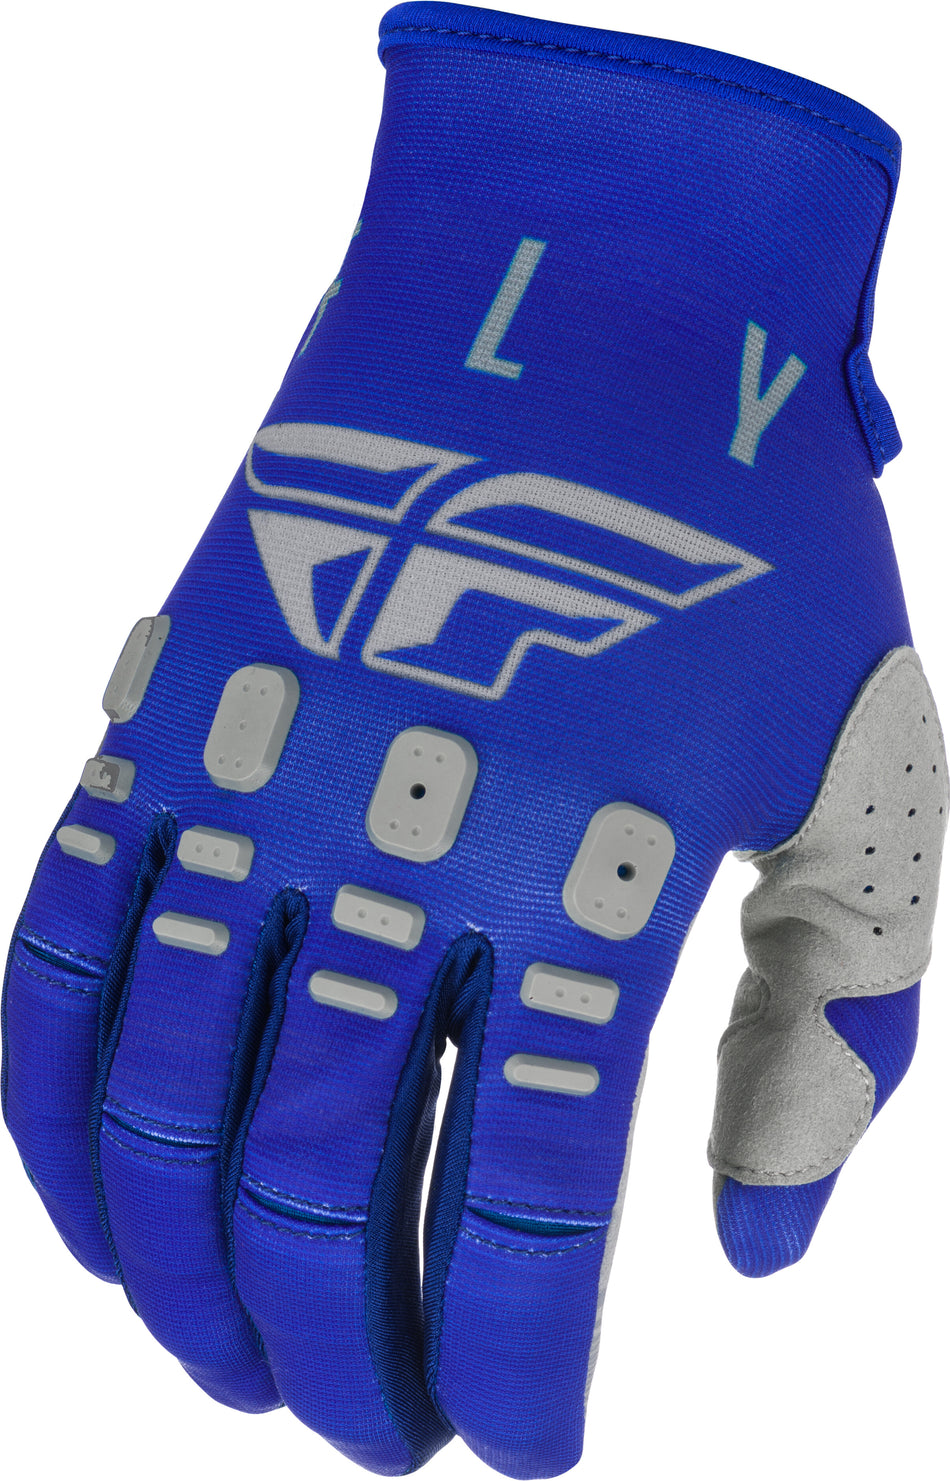 FLY RACING Kinetic K121 Gloves Blue/Navy/Grey Sz 11 374-41111